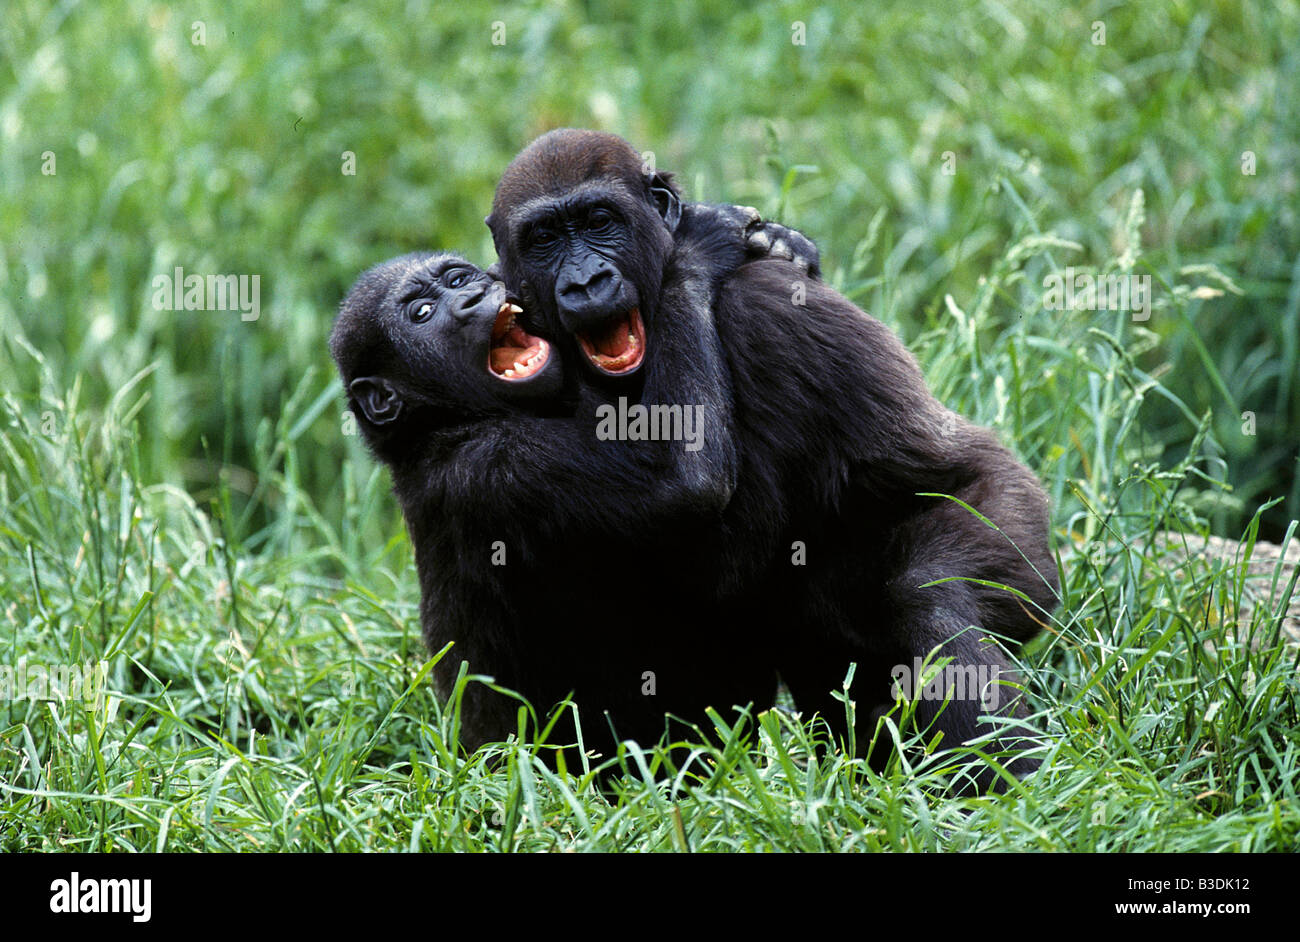 Gorilla Gorilla Fighting Stock Photos & Gorilla Gorilla Fighting Stock Images - Alamy1300 x 942